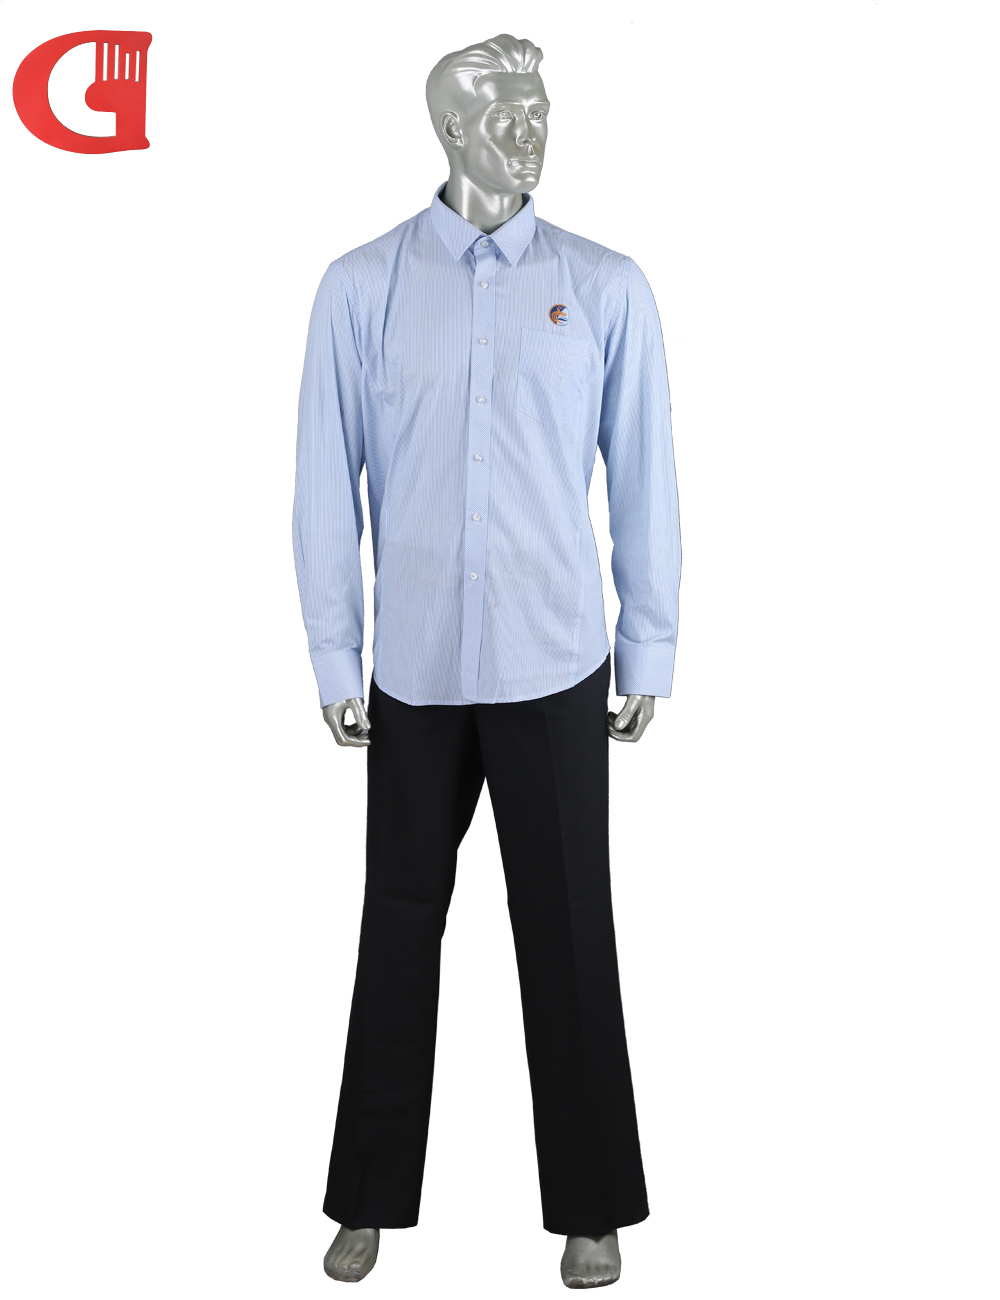 High Quality 100%Cotton Shirt  Comfortable Uniform Shirt